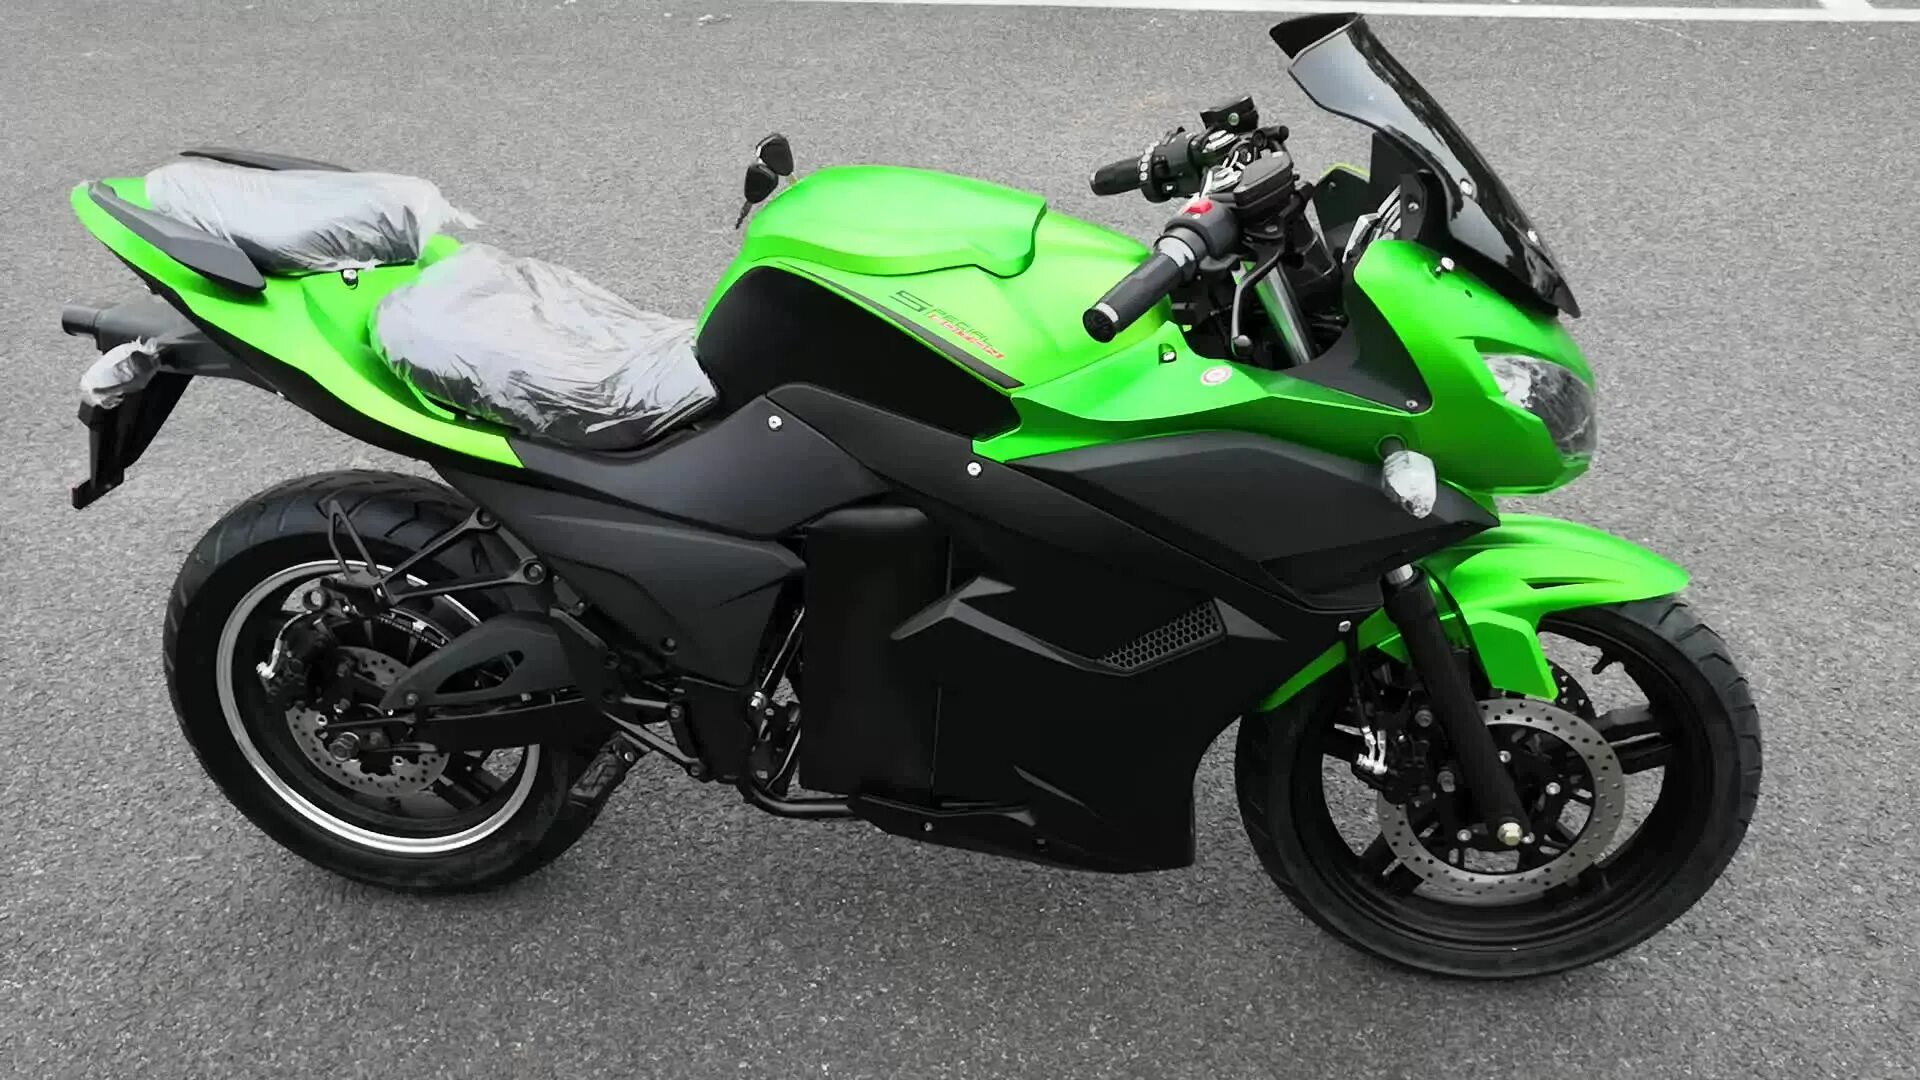 Мотоциклы купить недорого новые. Электромотоцикл Kawasaki Ninja 4000 Вт. Электромотоцикл 3000вт. Спортбайк Ninja 3000w. Китайский электромотоцикл r6.